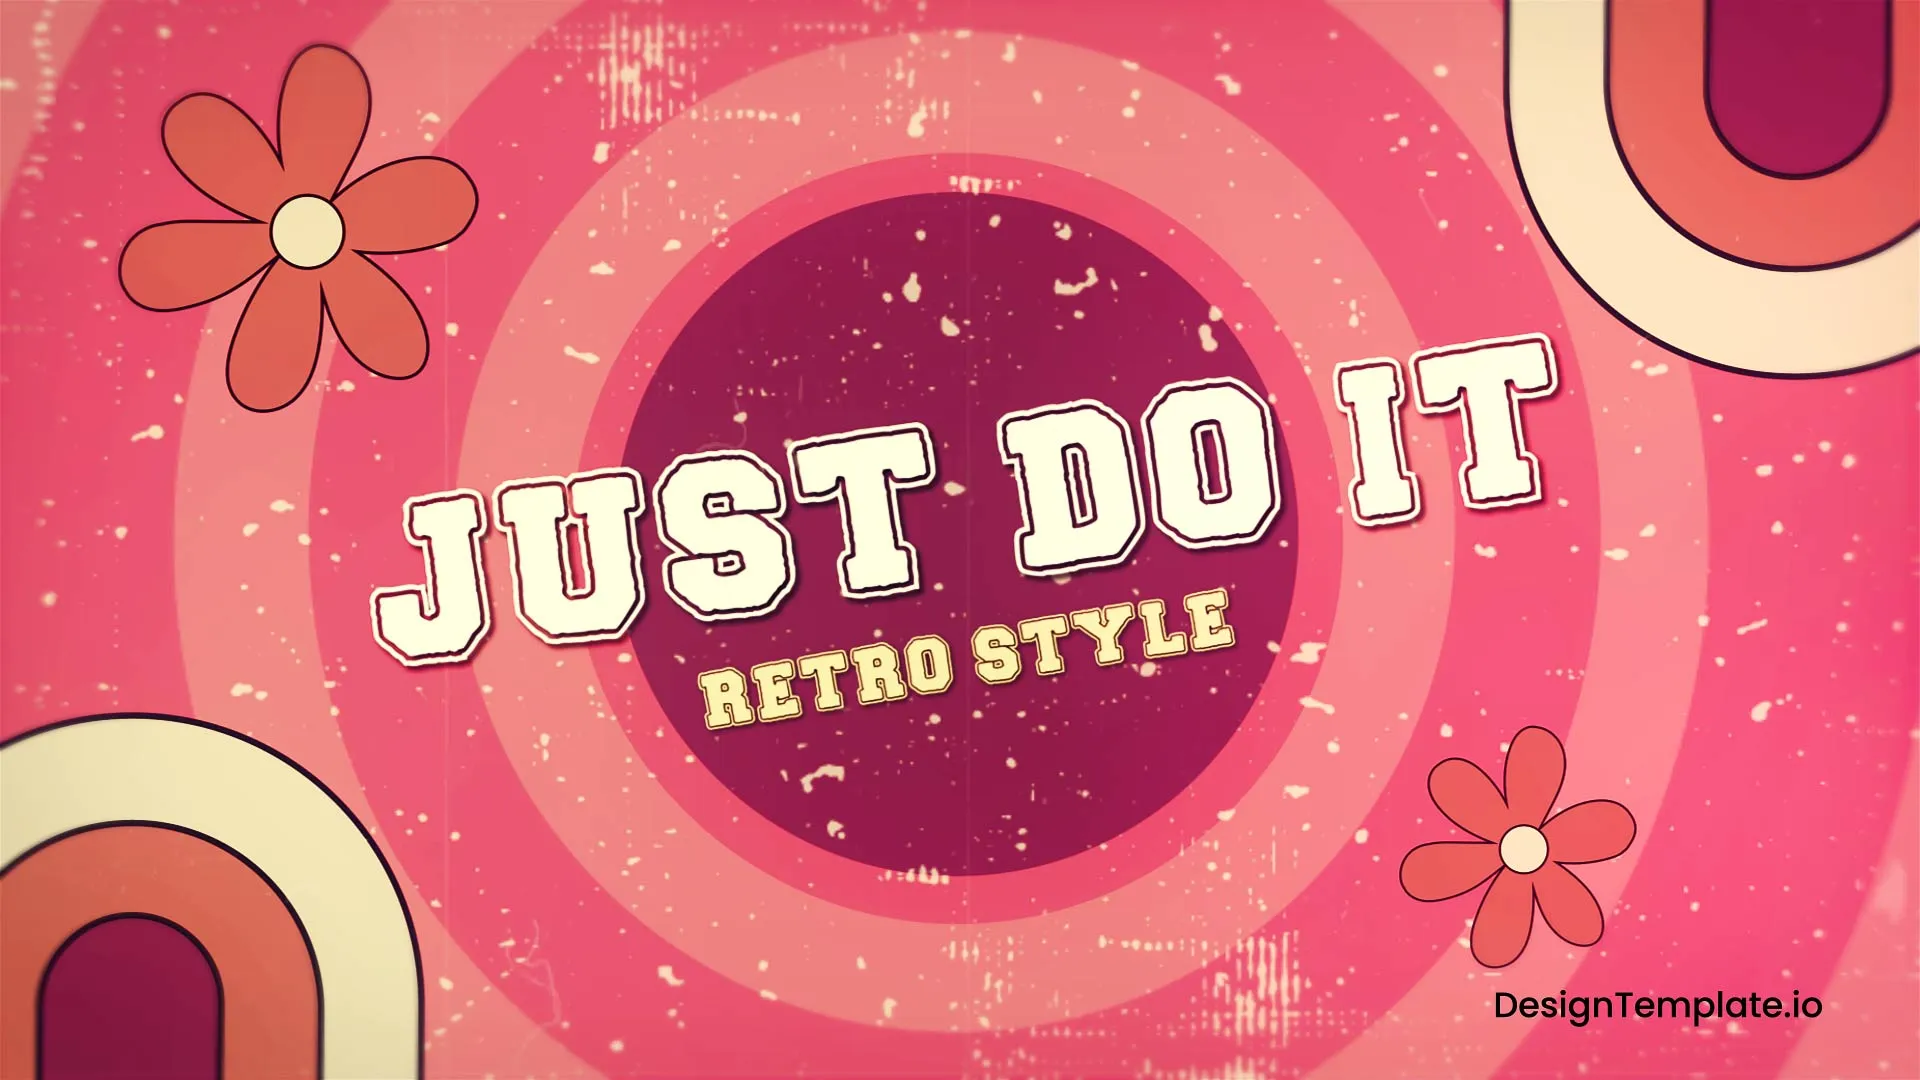 Classic Retro Style Text Animation